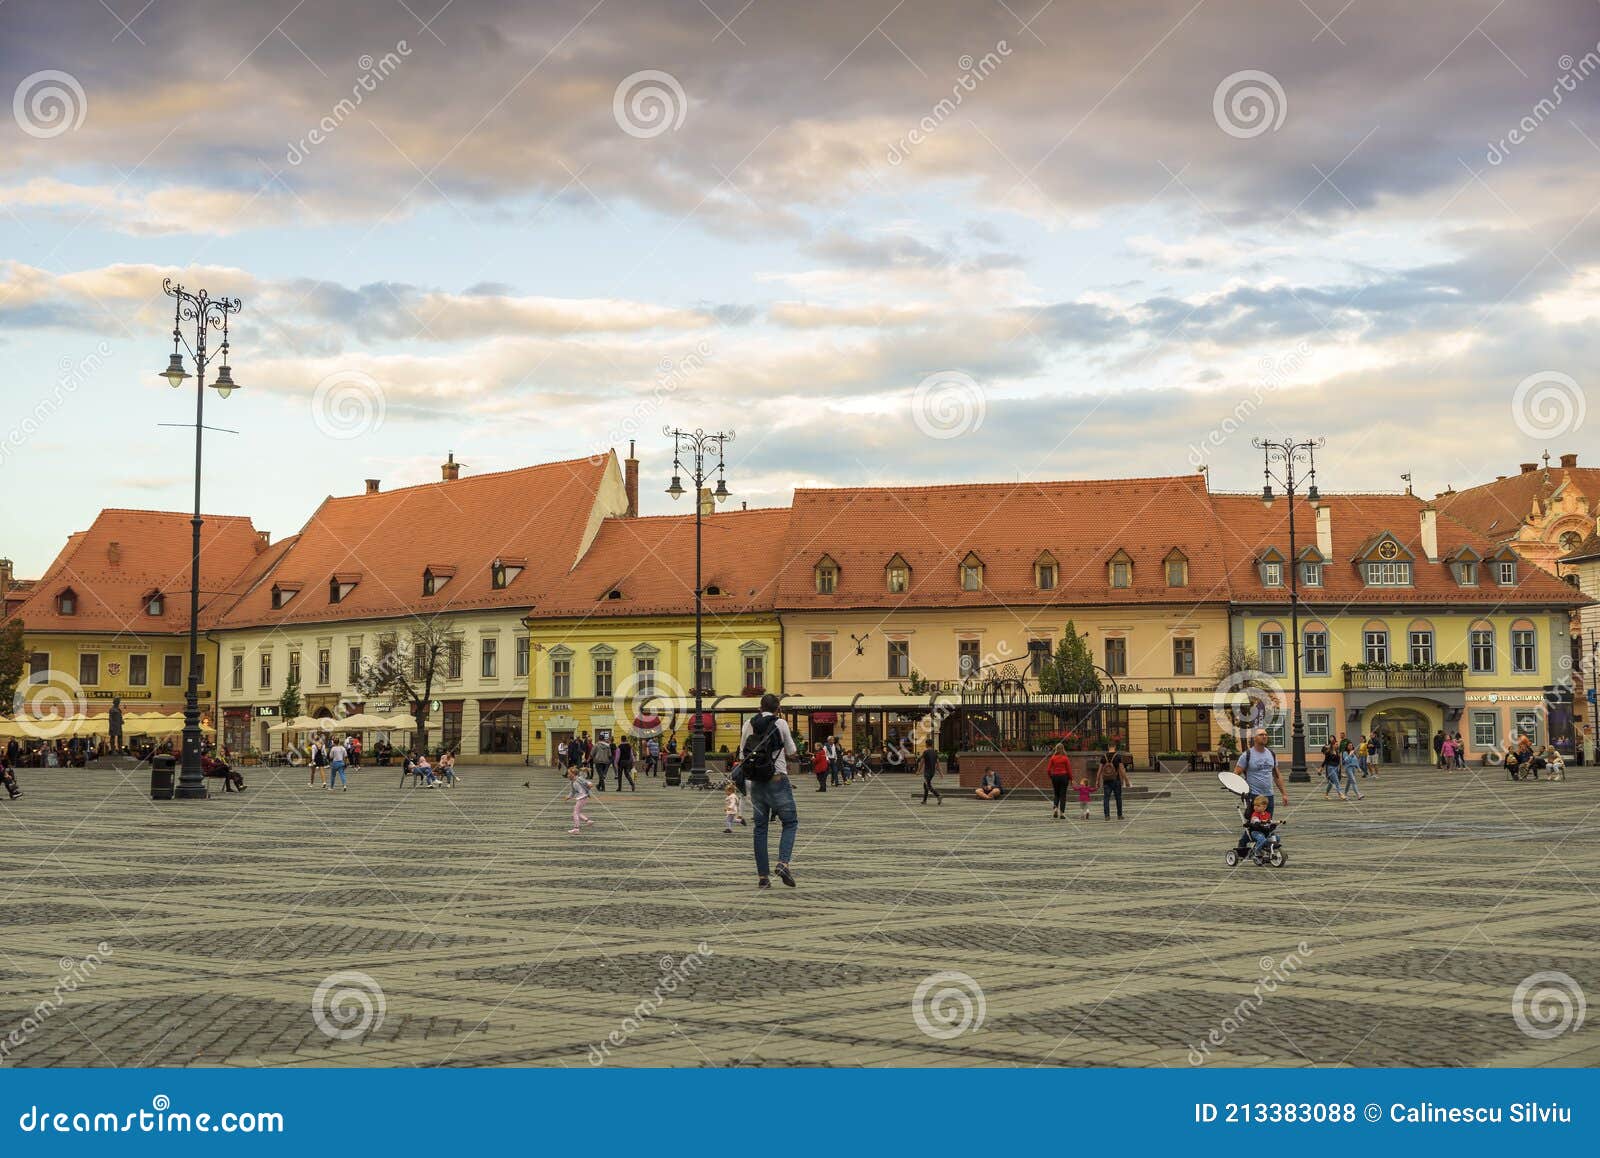 205 Brukenthal Palace Sibiu Photos Free Royalty Free Stock Photos From Dreamstime